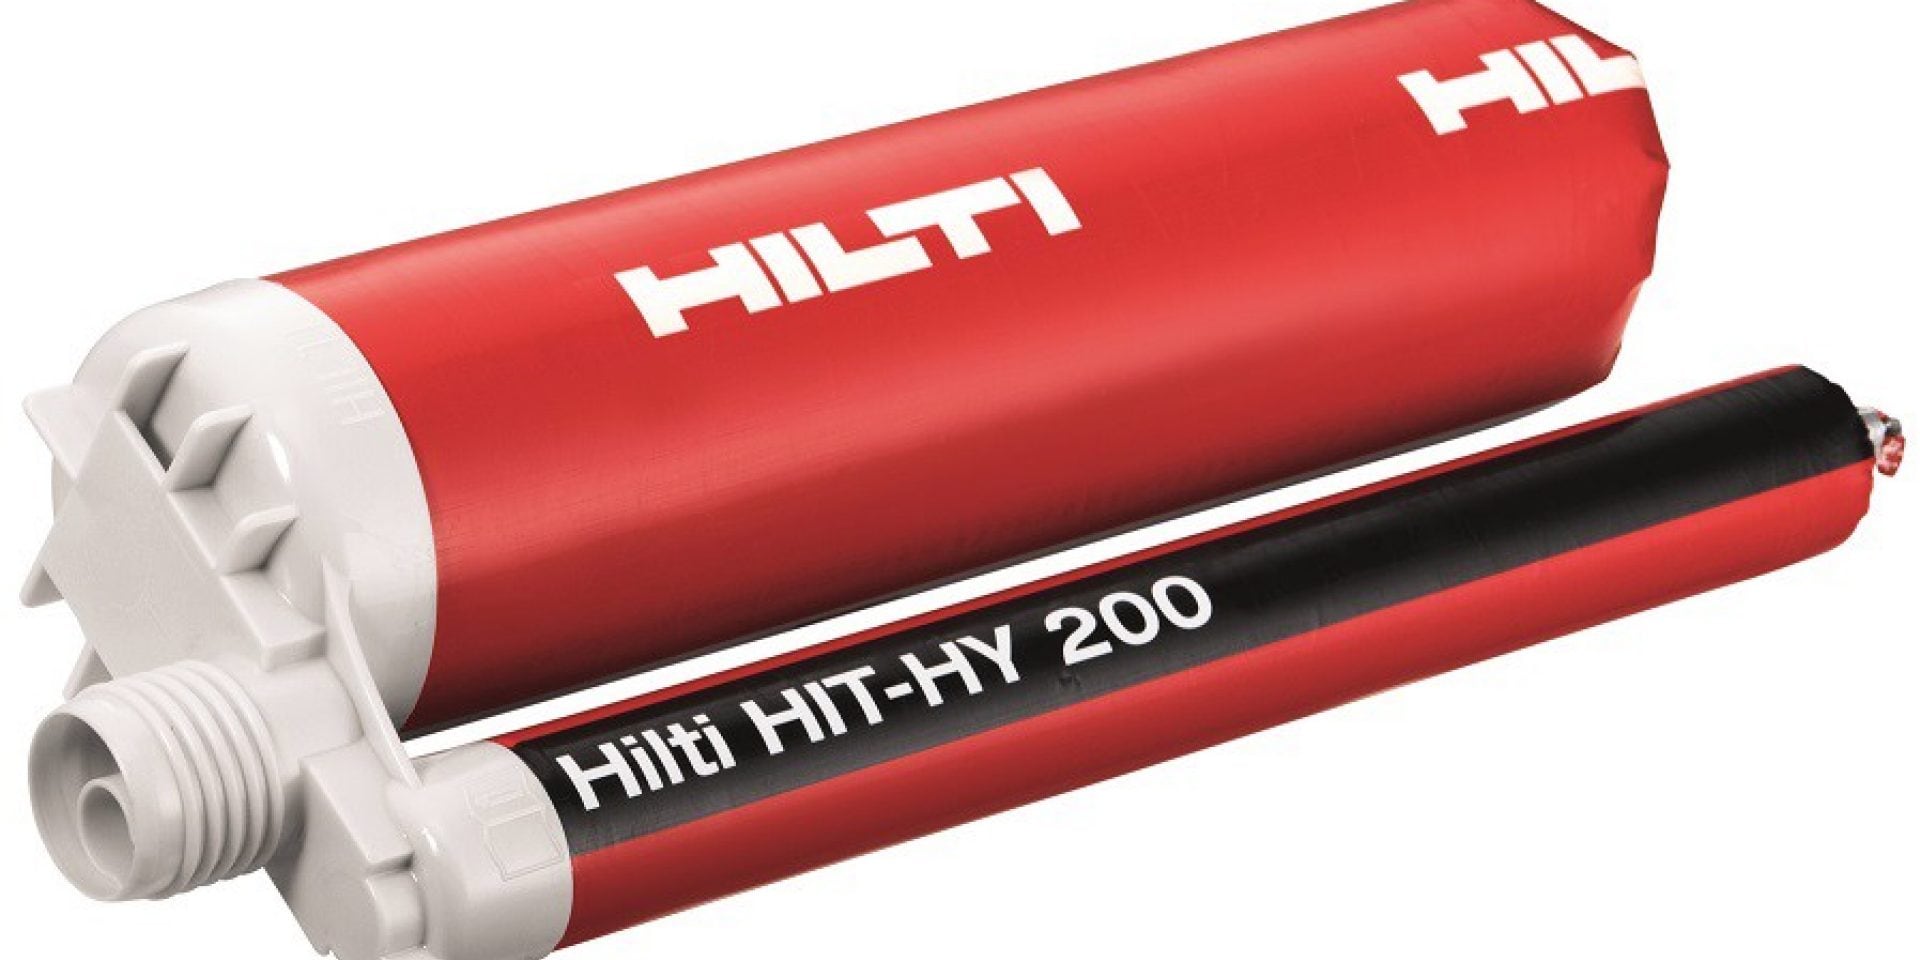 Hilti HIT-HY 200 injectable adhesive mortar